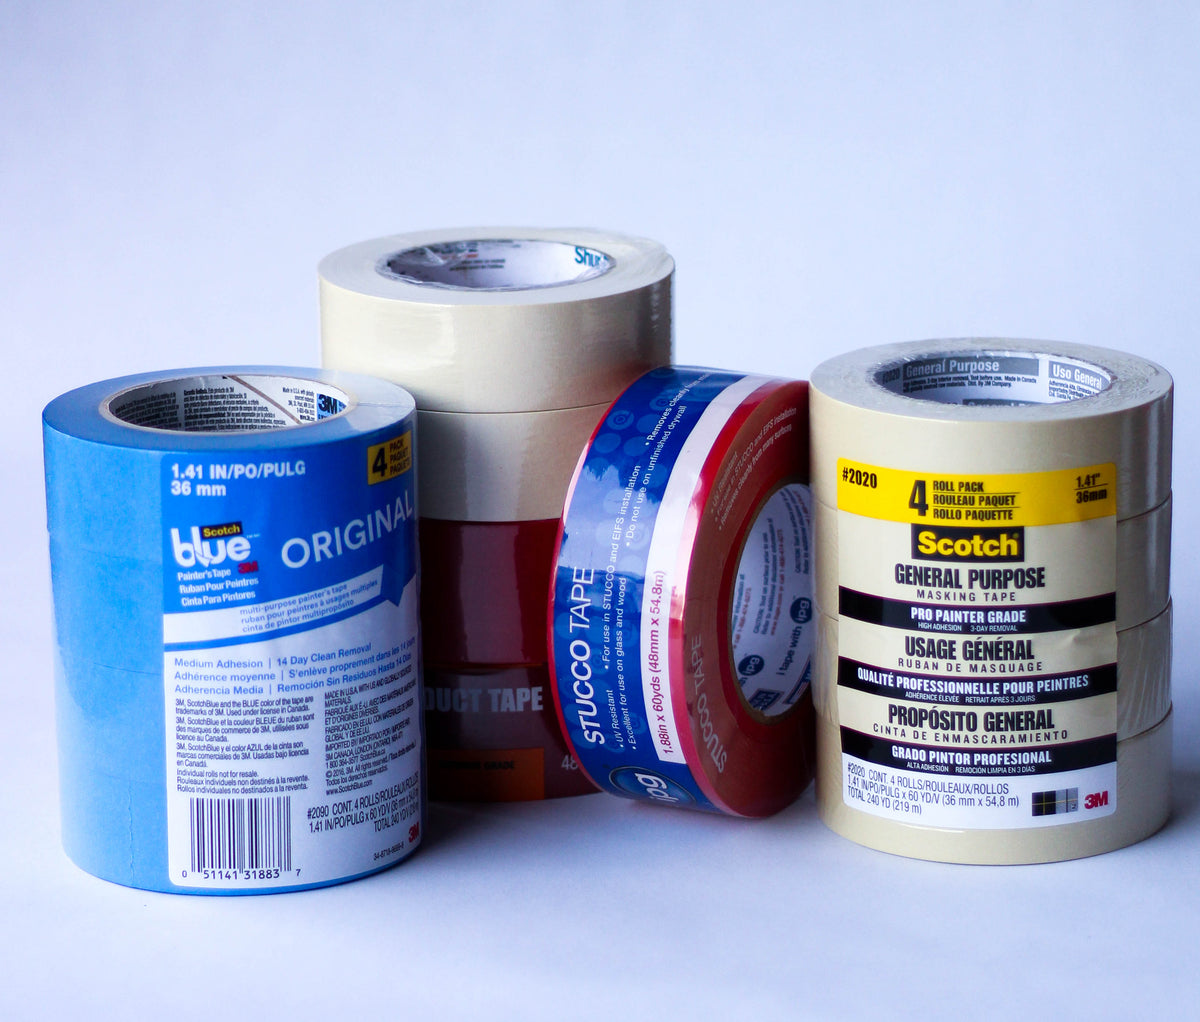 8 pack 1 inch x 60 yard (24mm x 55m) STIKK Blue Painters Masking Tape